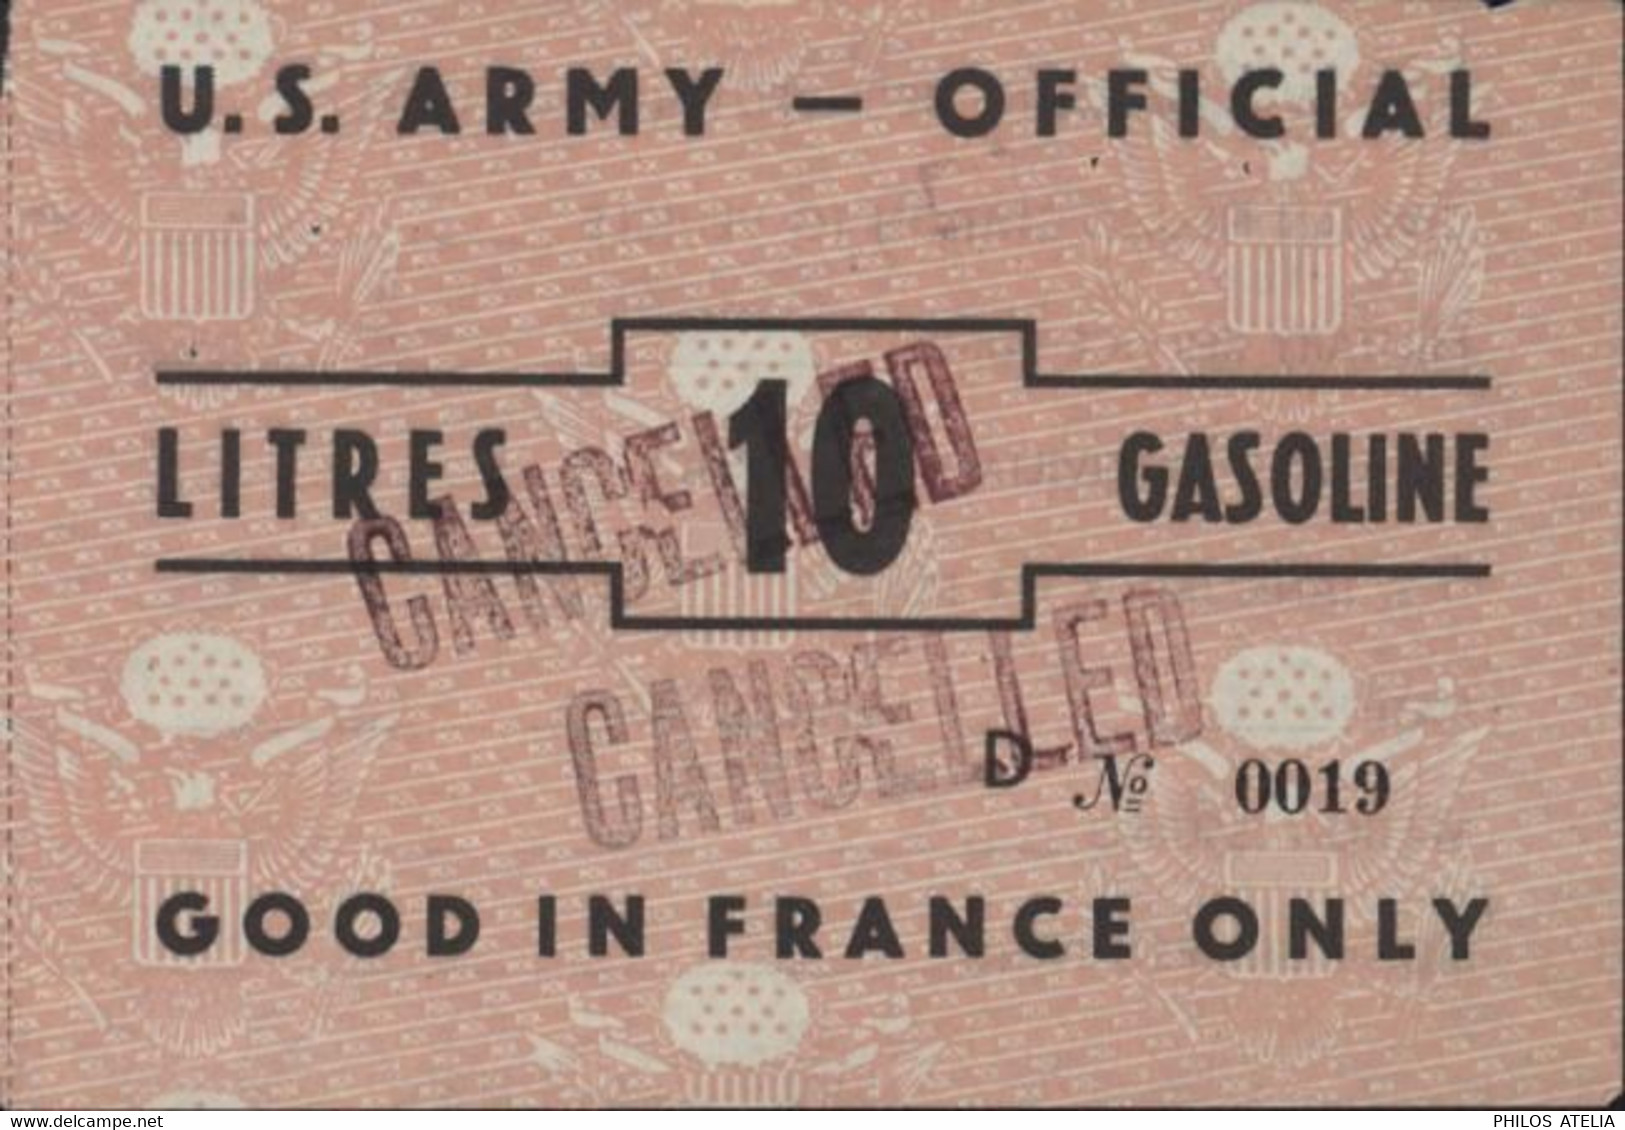 Bon 10L Carburant Gasoline U.S. ARMY OFFICIAL Good In France Only Cancelled - Bons & Nécessité